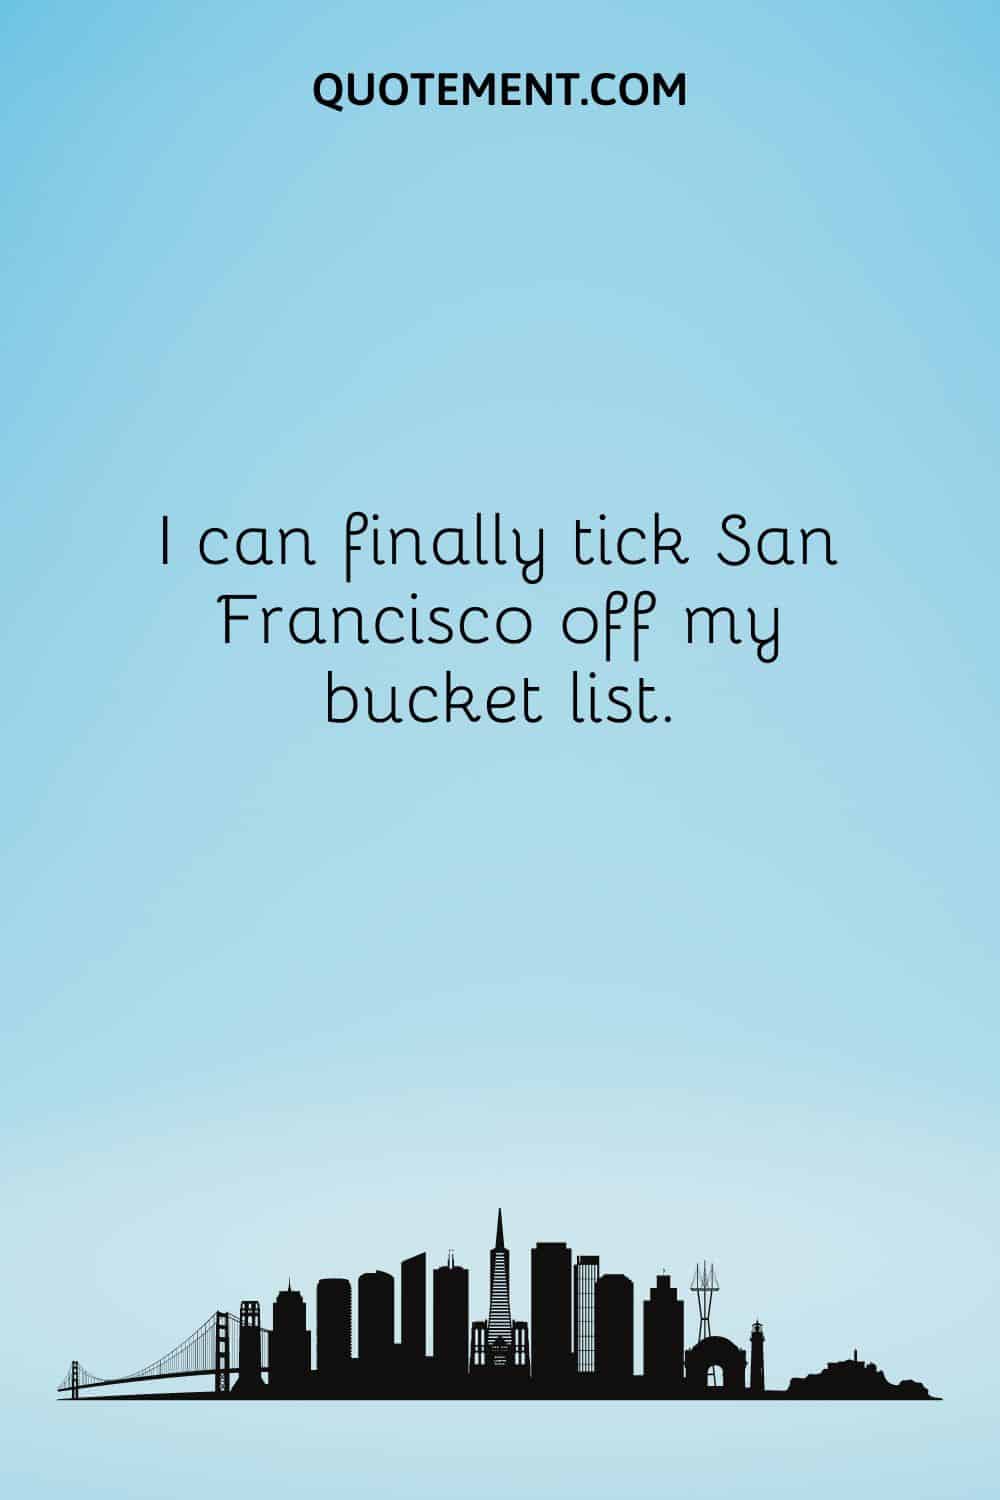  I can finally tick San Francisco off my bucket list.
